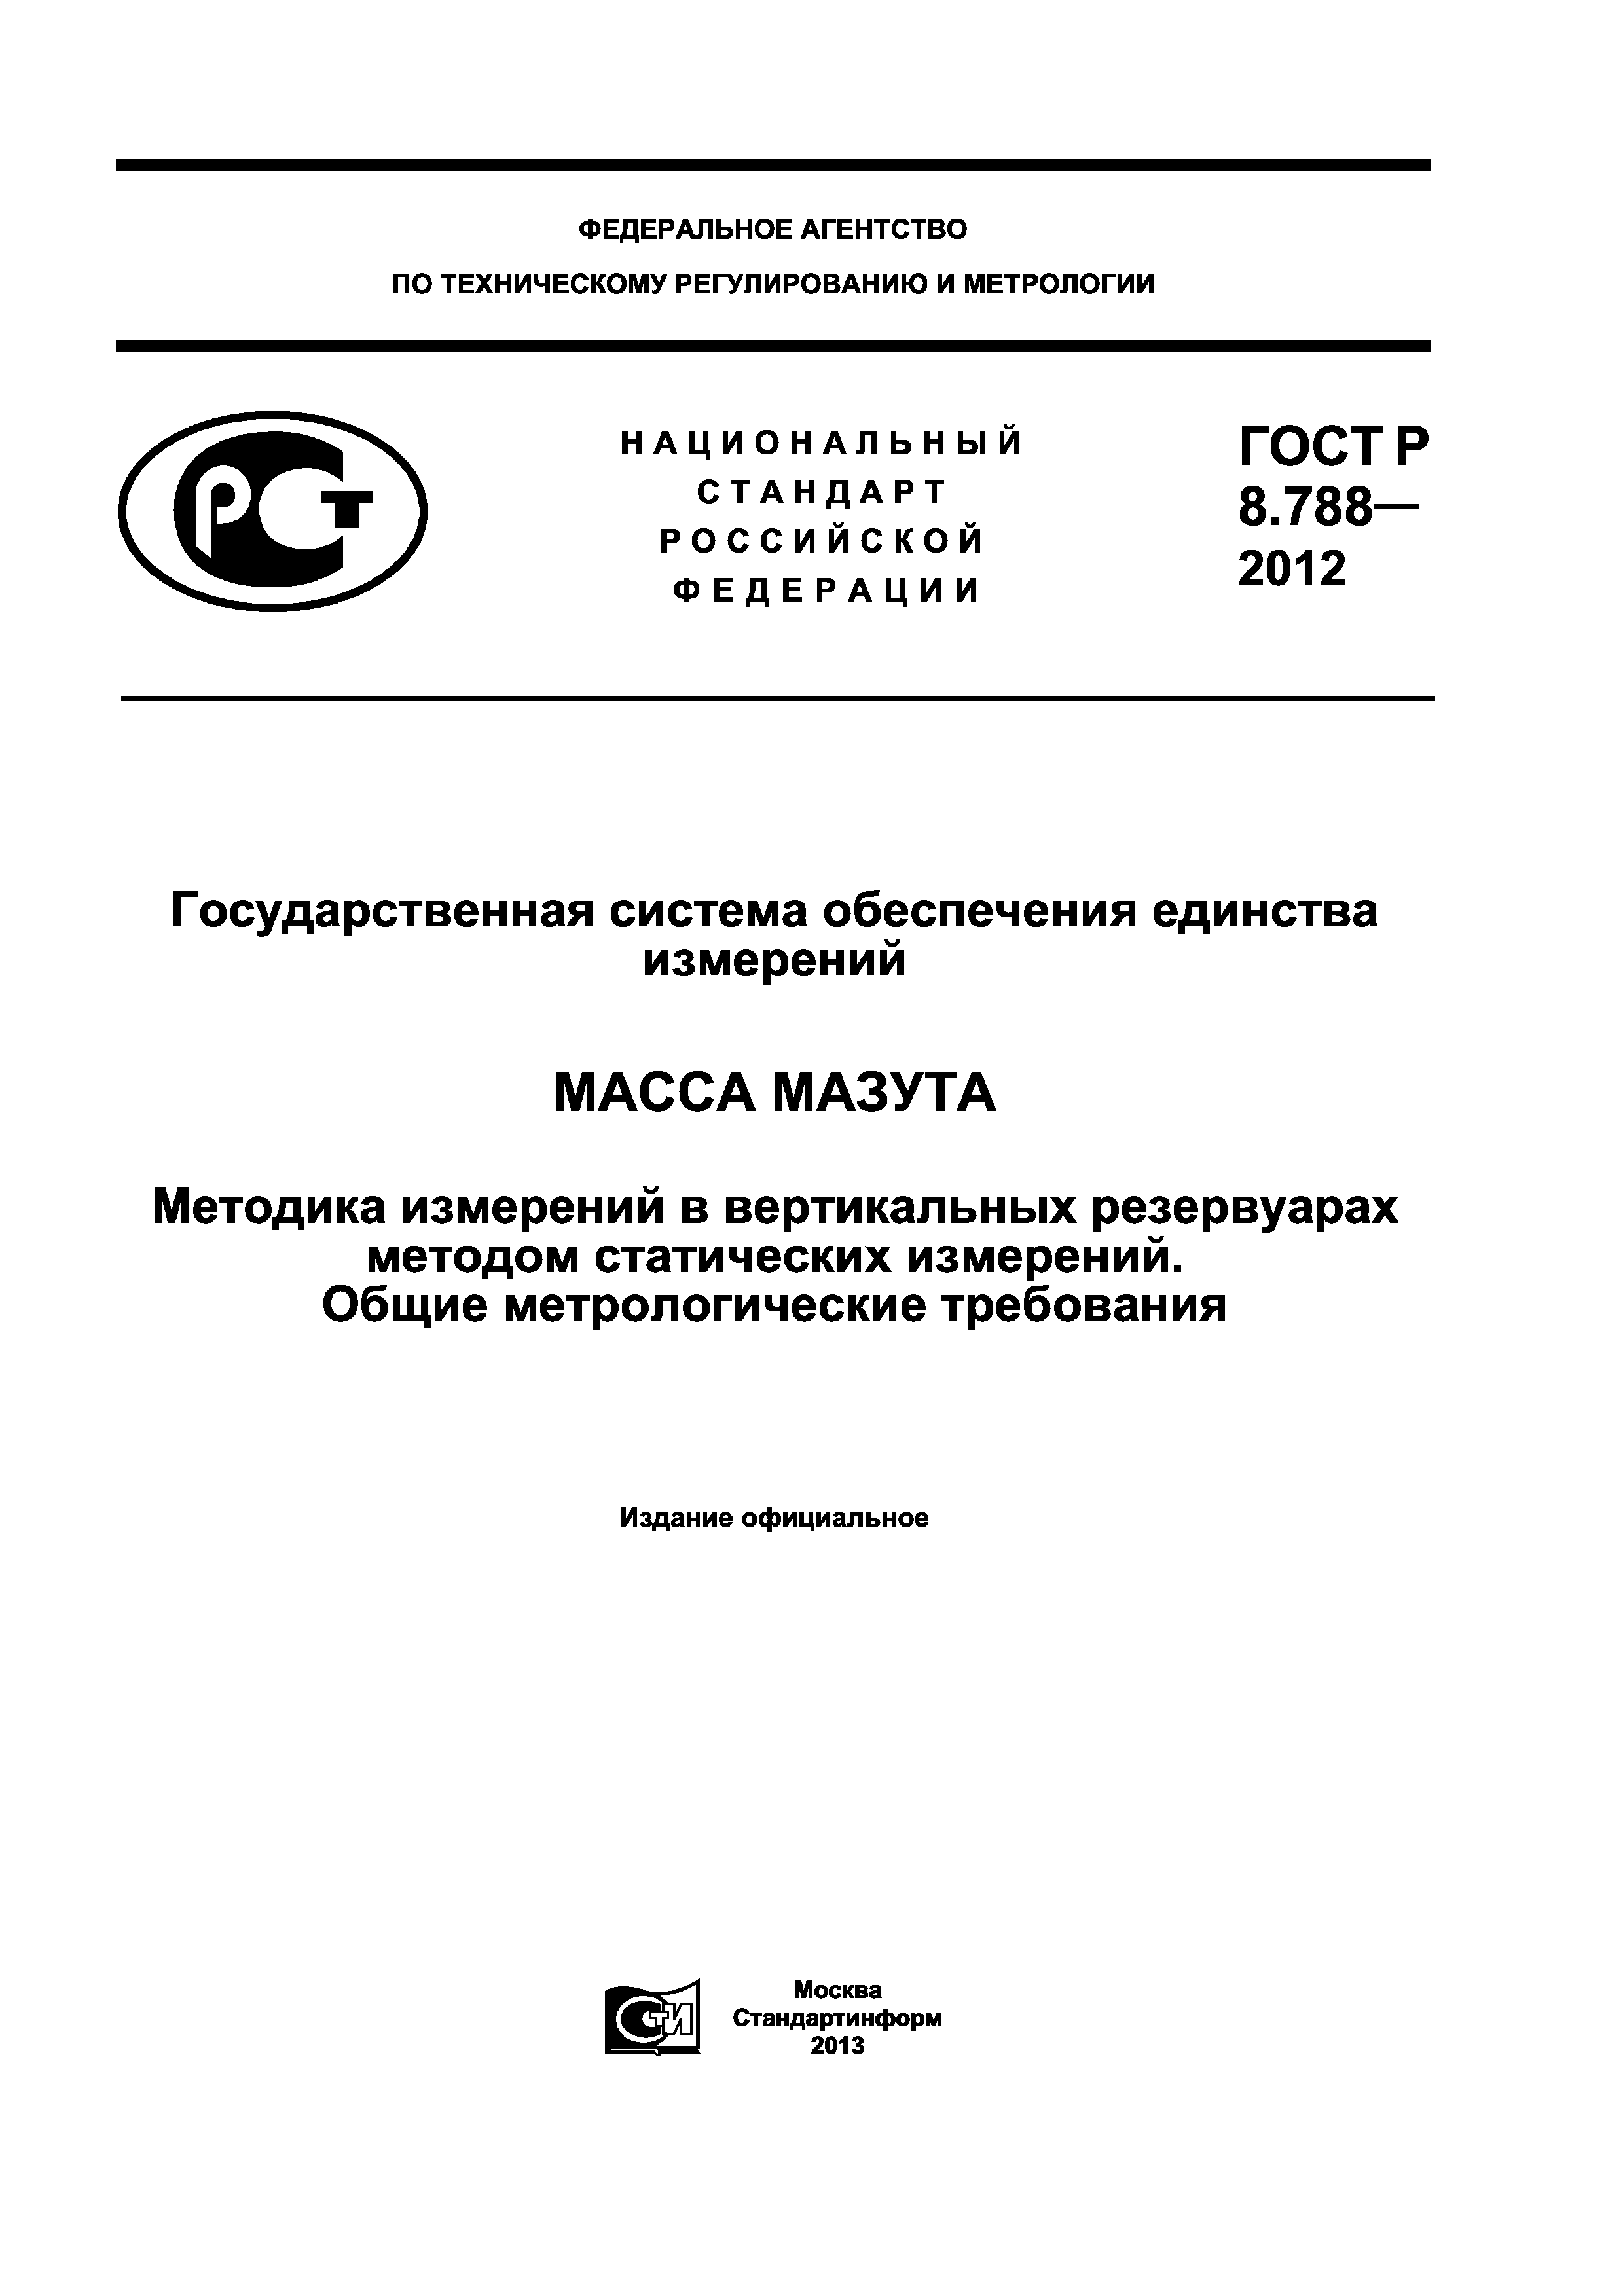 ГОСТ Р 8.788-2012